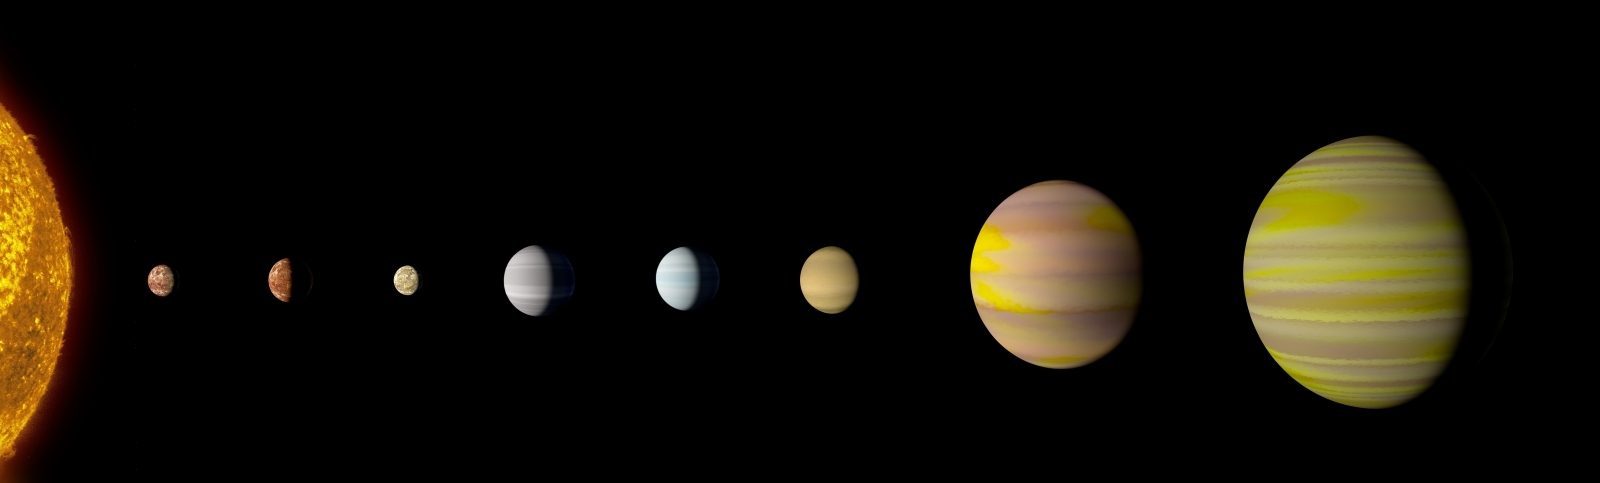 Kepler-90 star system